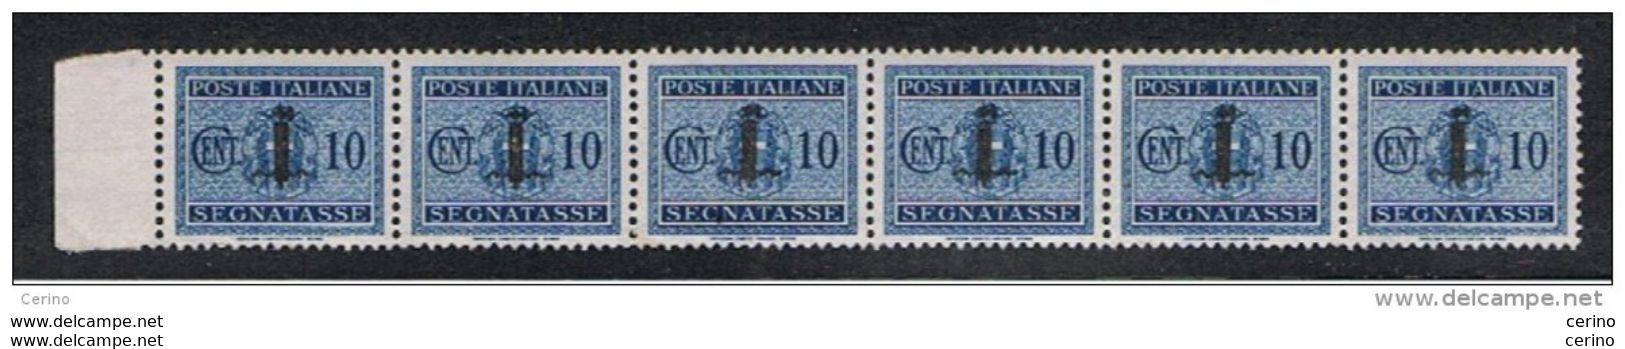 R.S.I.:  1944  TASSE  SOPRASTAMPATI  -  10 C. AZZURRO  STRISCIA  6  N. -  SASS. 61 - Postage Due